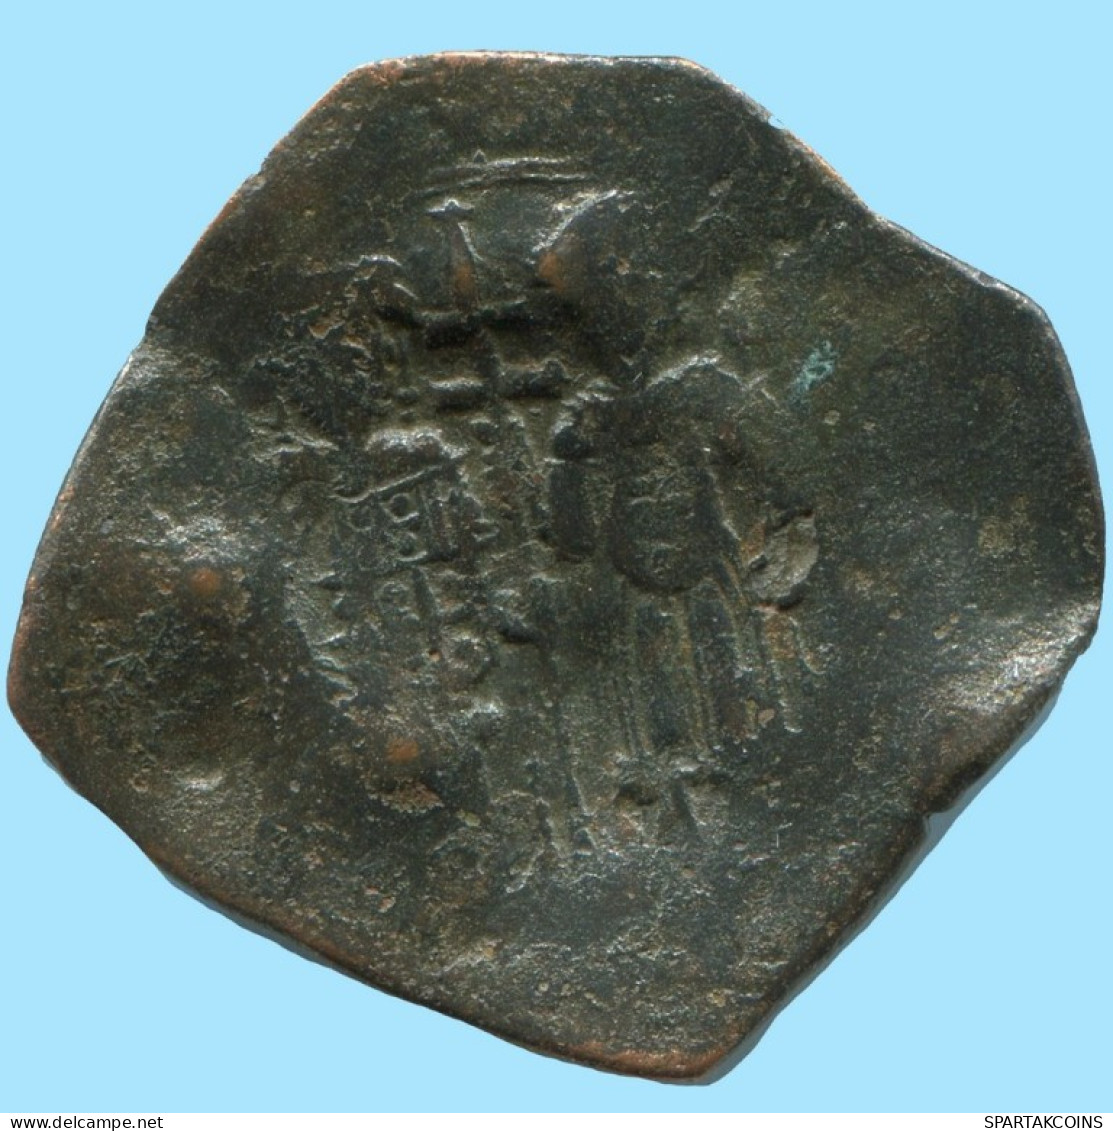 ALEXIOS III ANGELOS ASPRON TRACHY BILLON BYZANTINE Moneda 2.7g/27mm #AB455.9.E.A - Byzantium